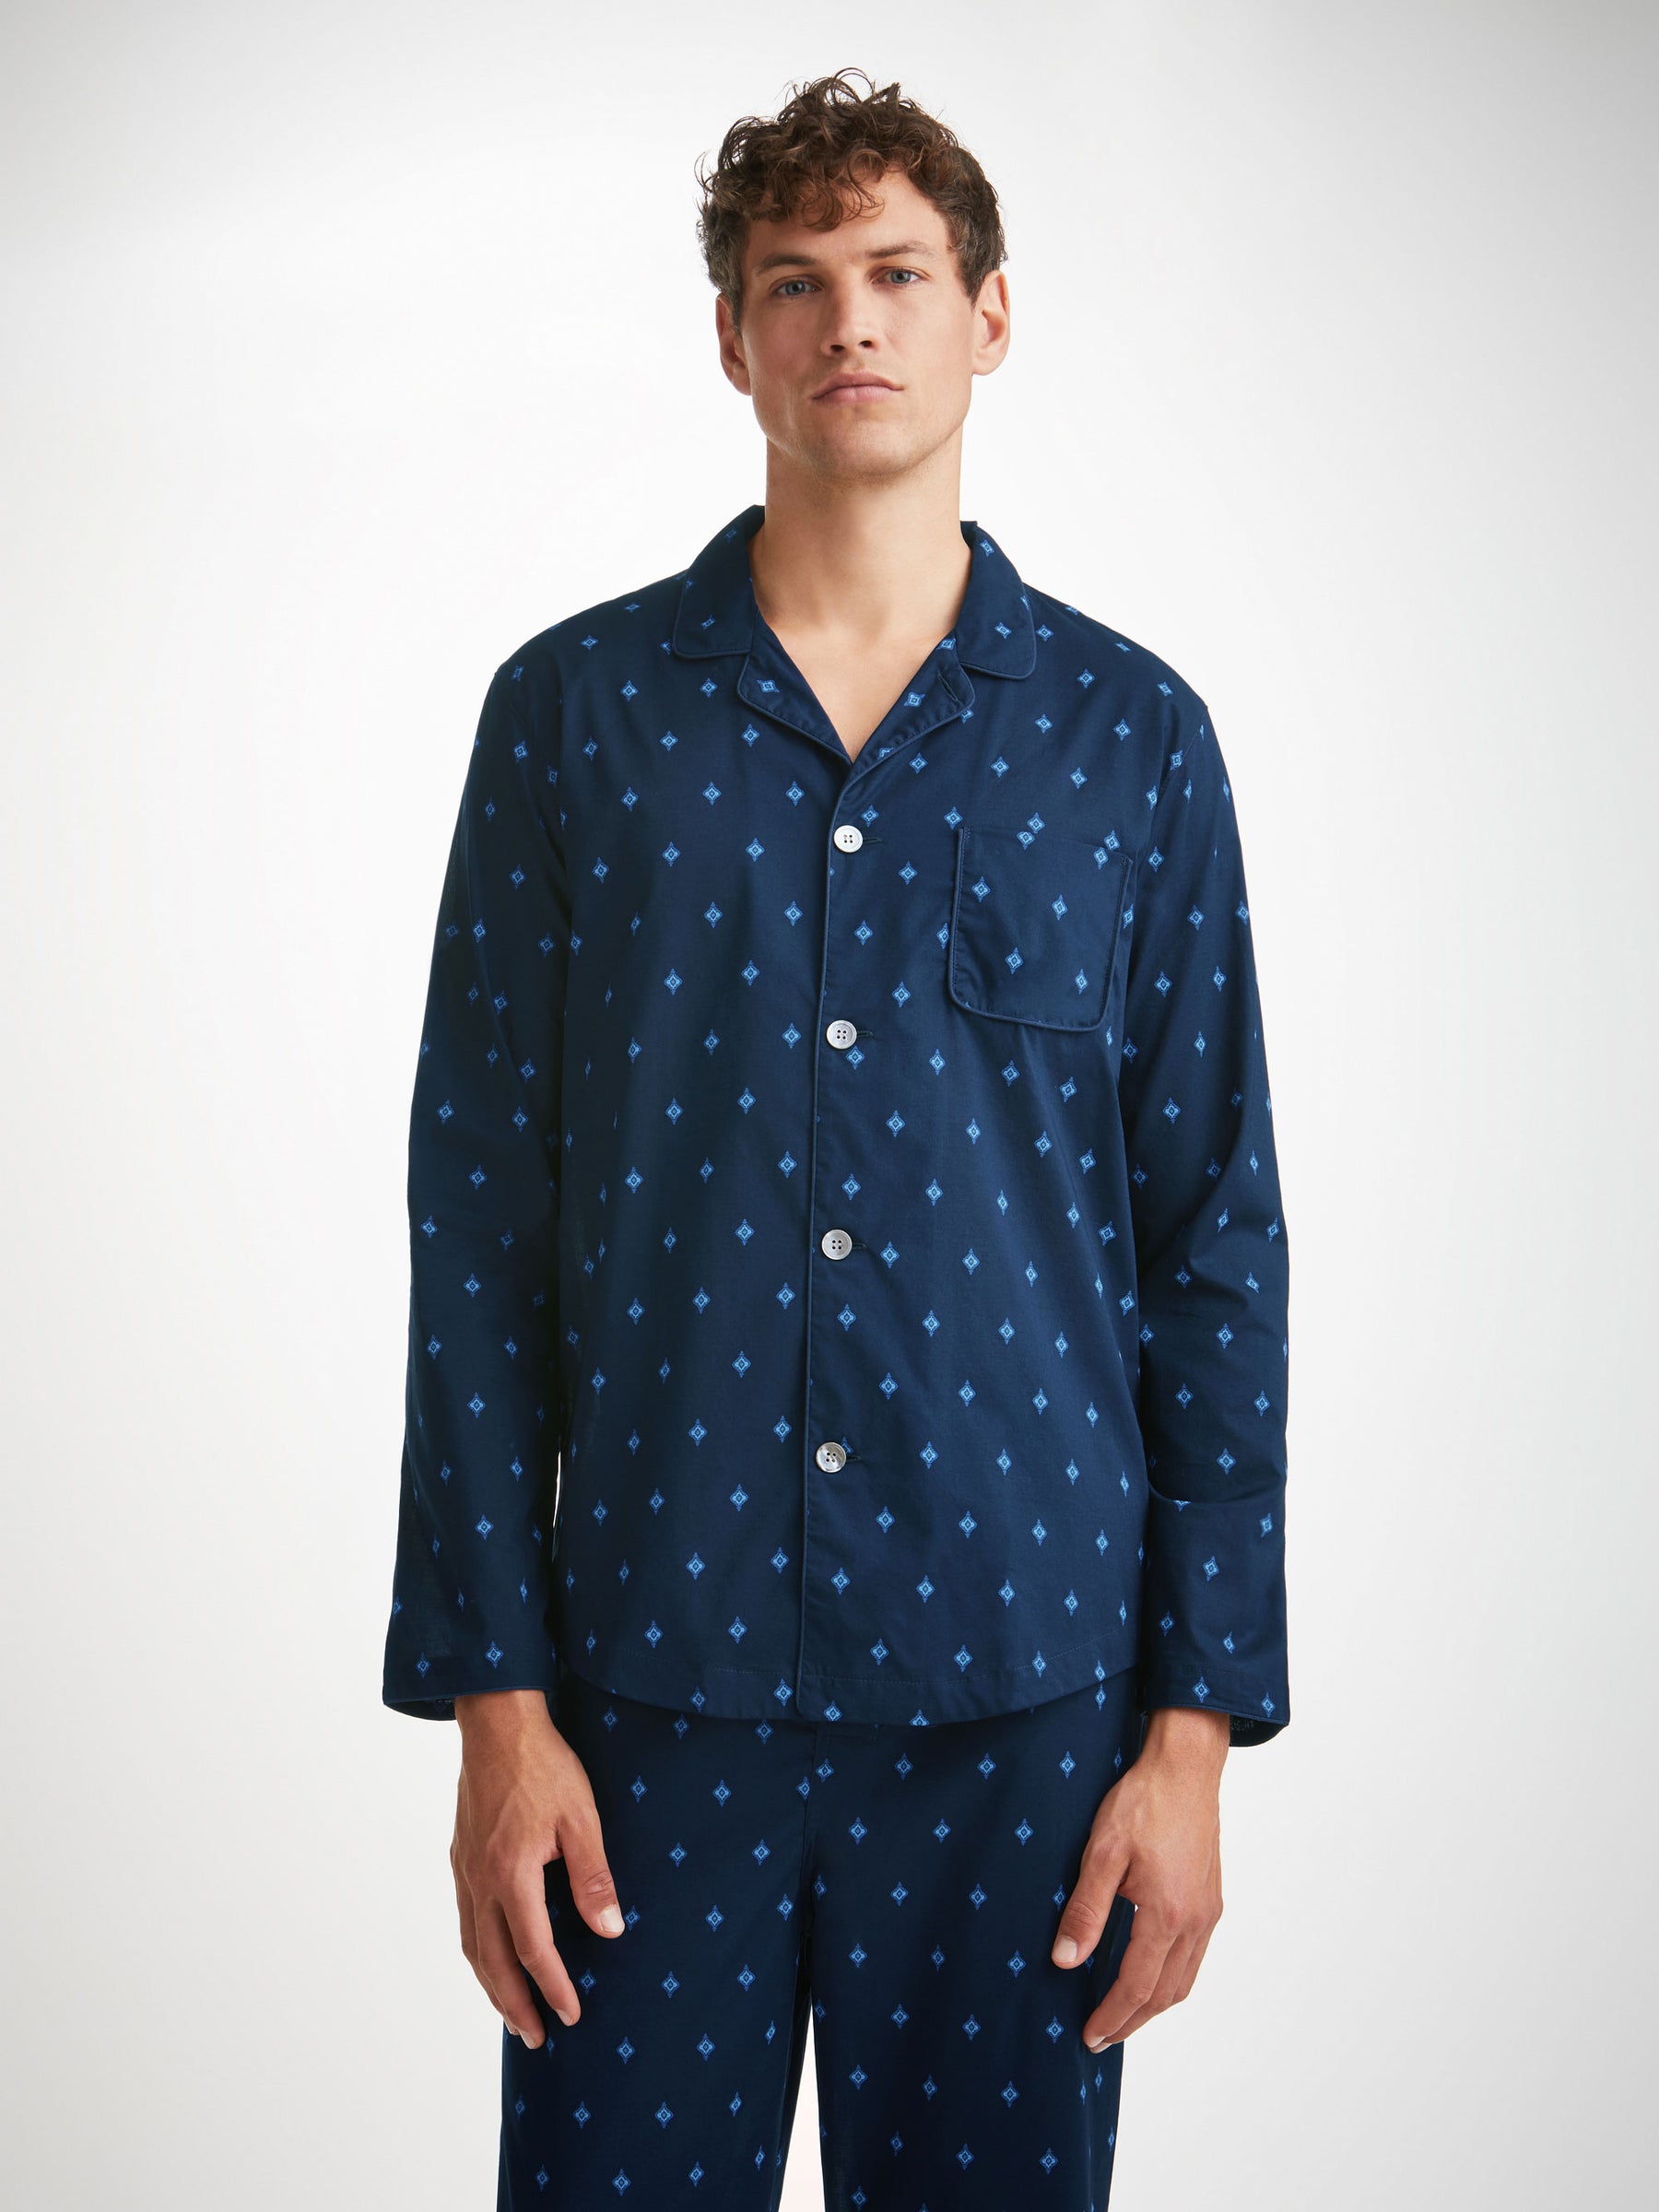 Men's Modern Fit Pyjamas Nelson 98 Cotton Batiste Navy